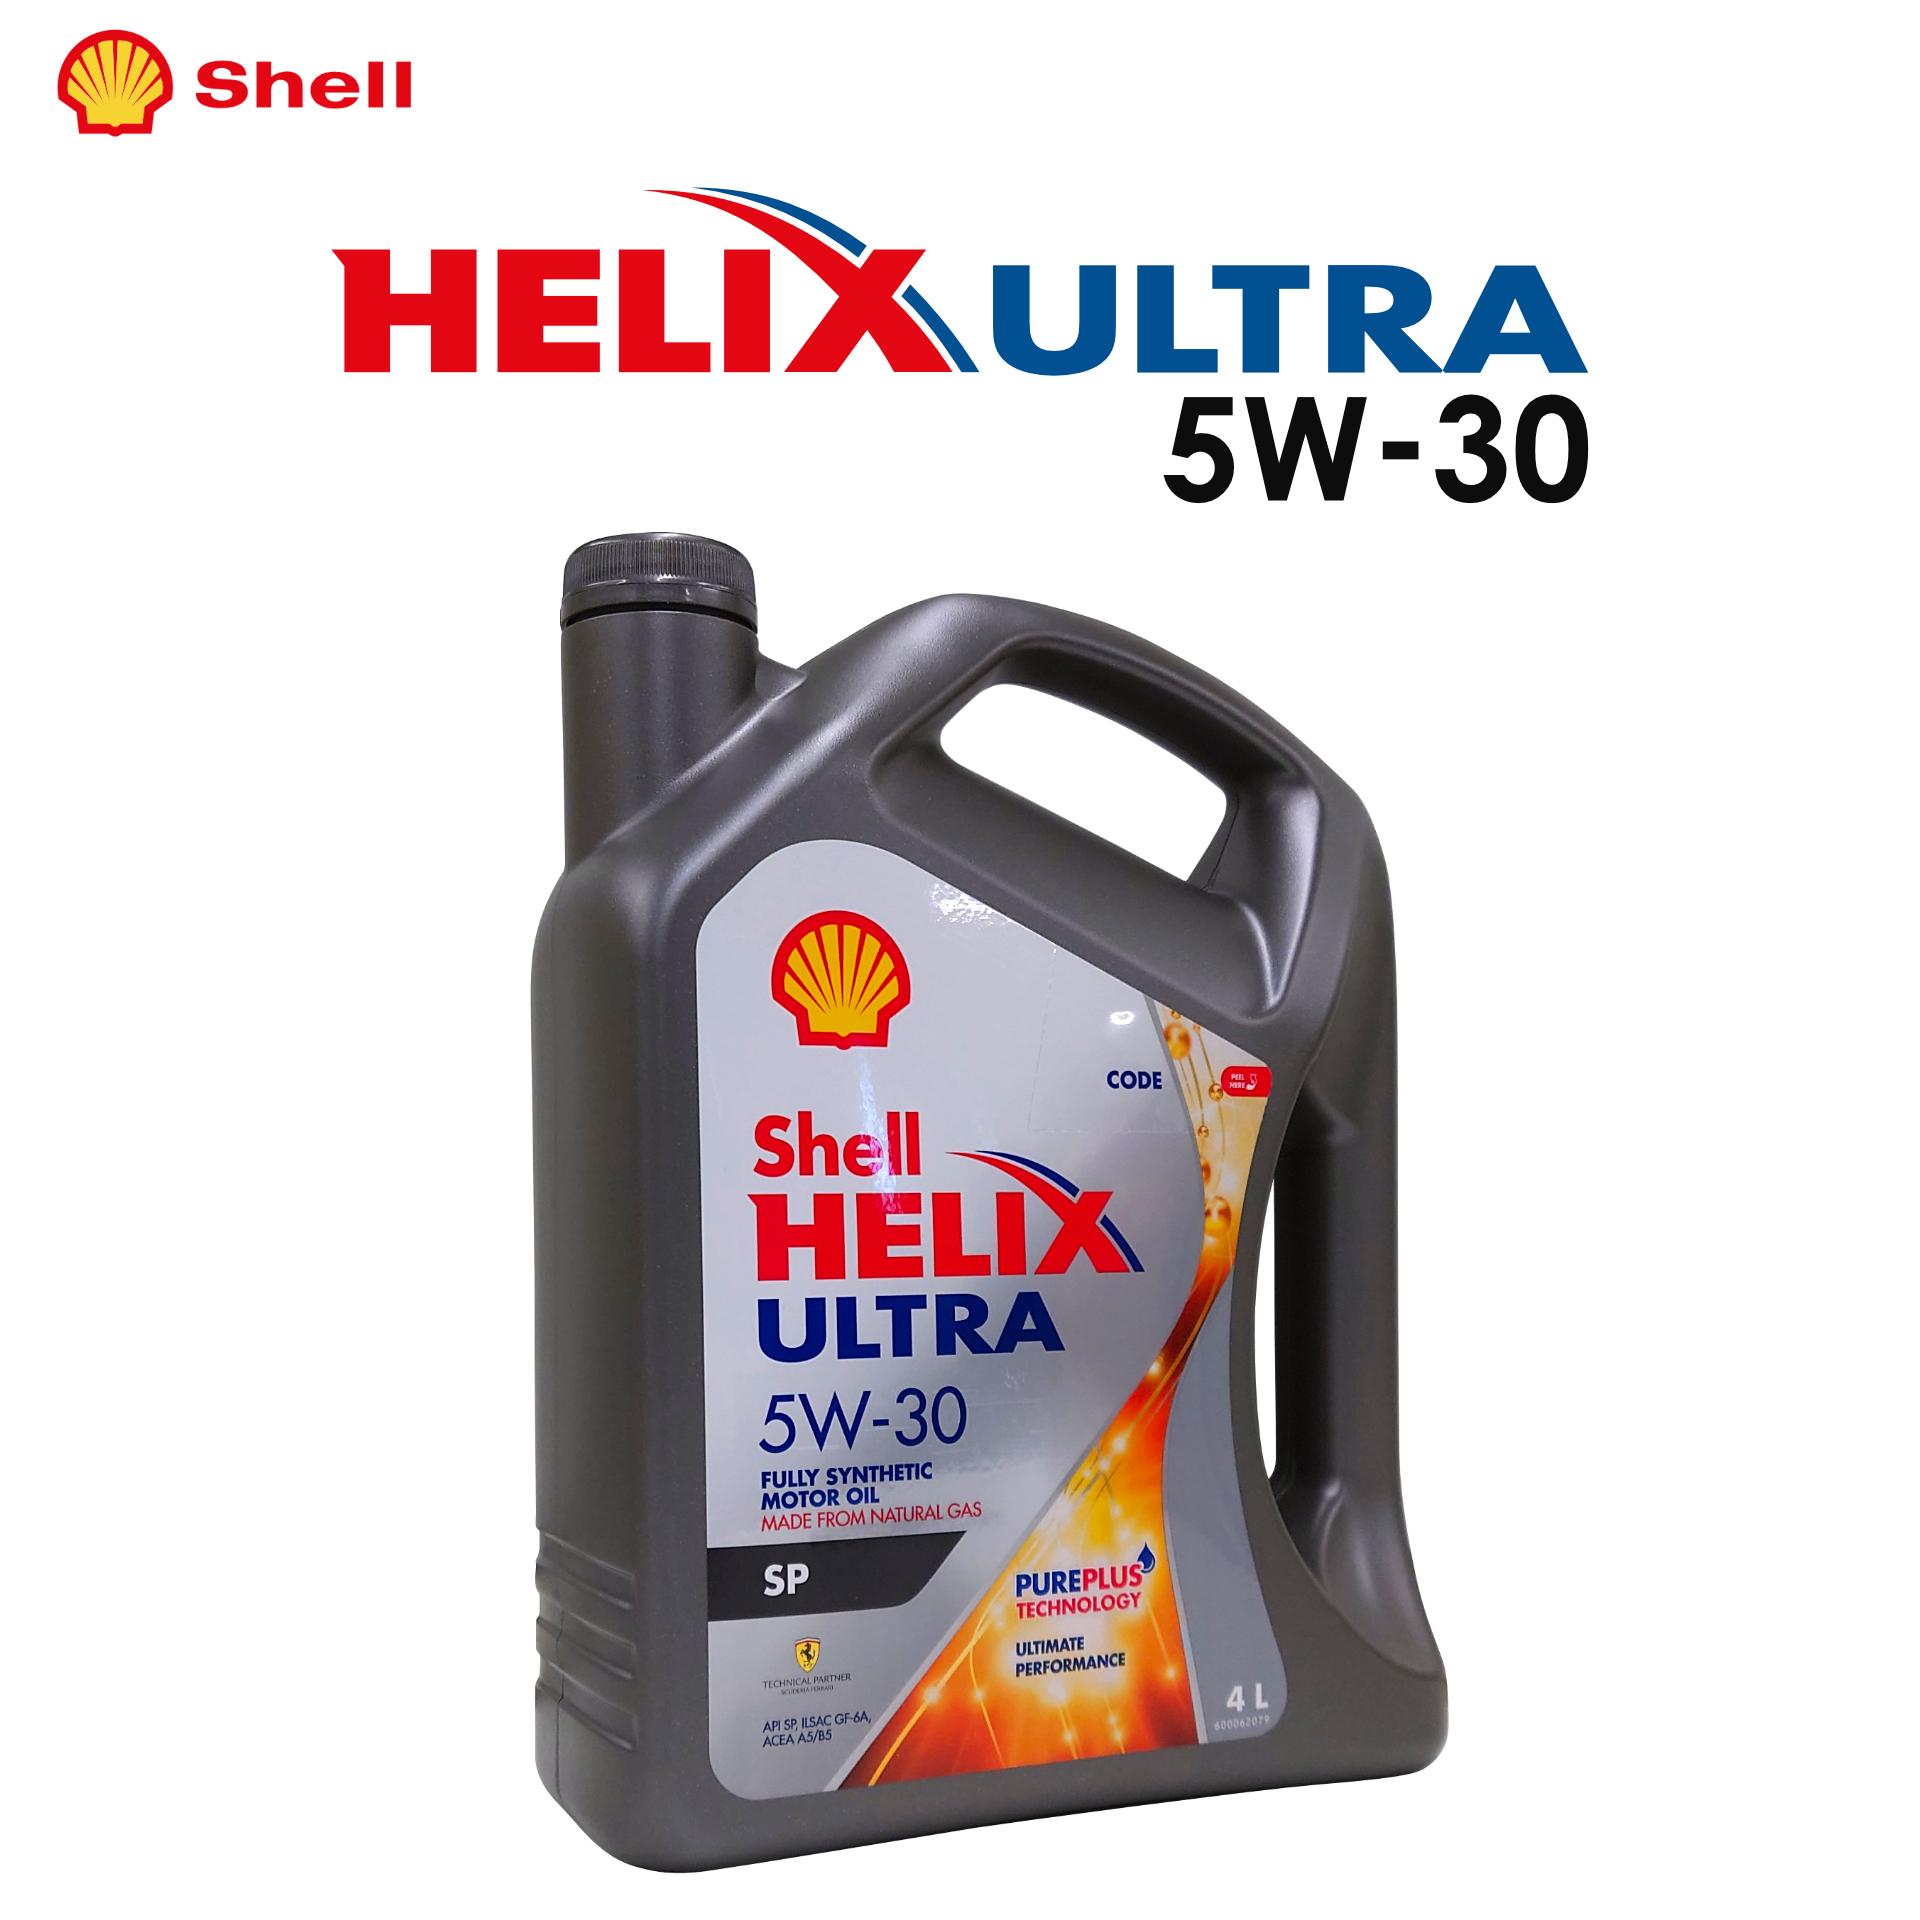 Shell HELIX ULTRA SP (シェル ヒリックス ウルトラ SP) 5W-30 4L エンジンオイル [並行輸入品]